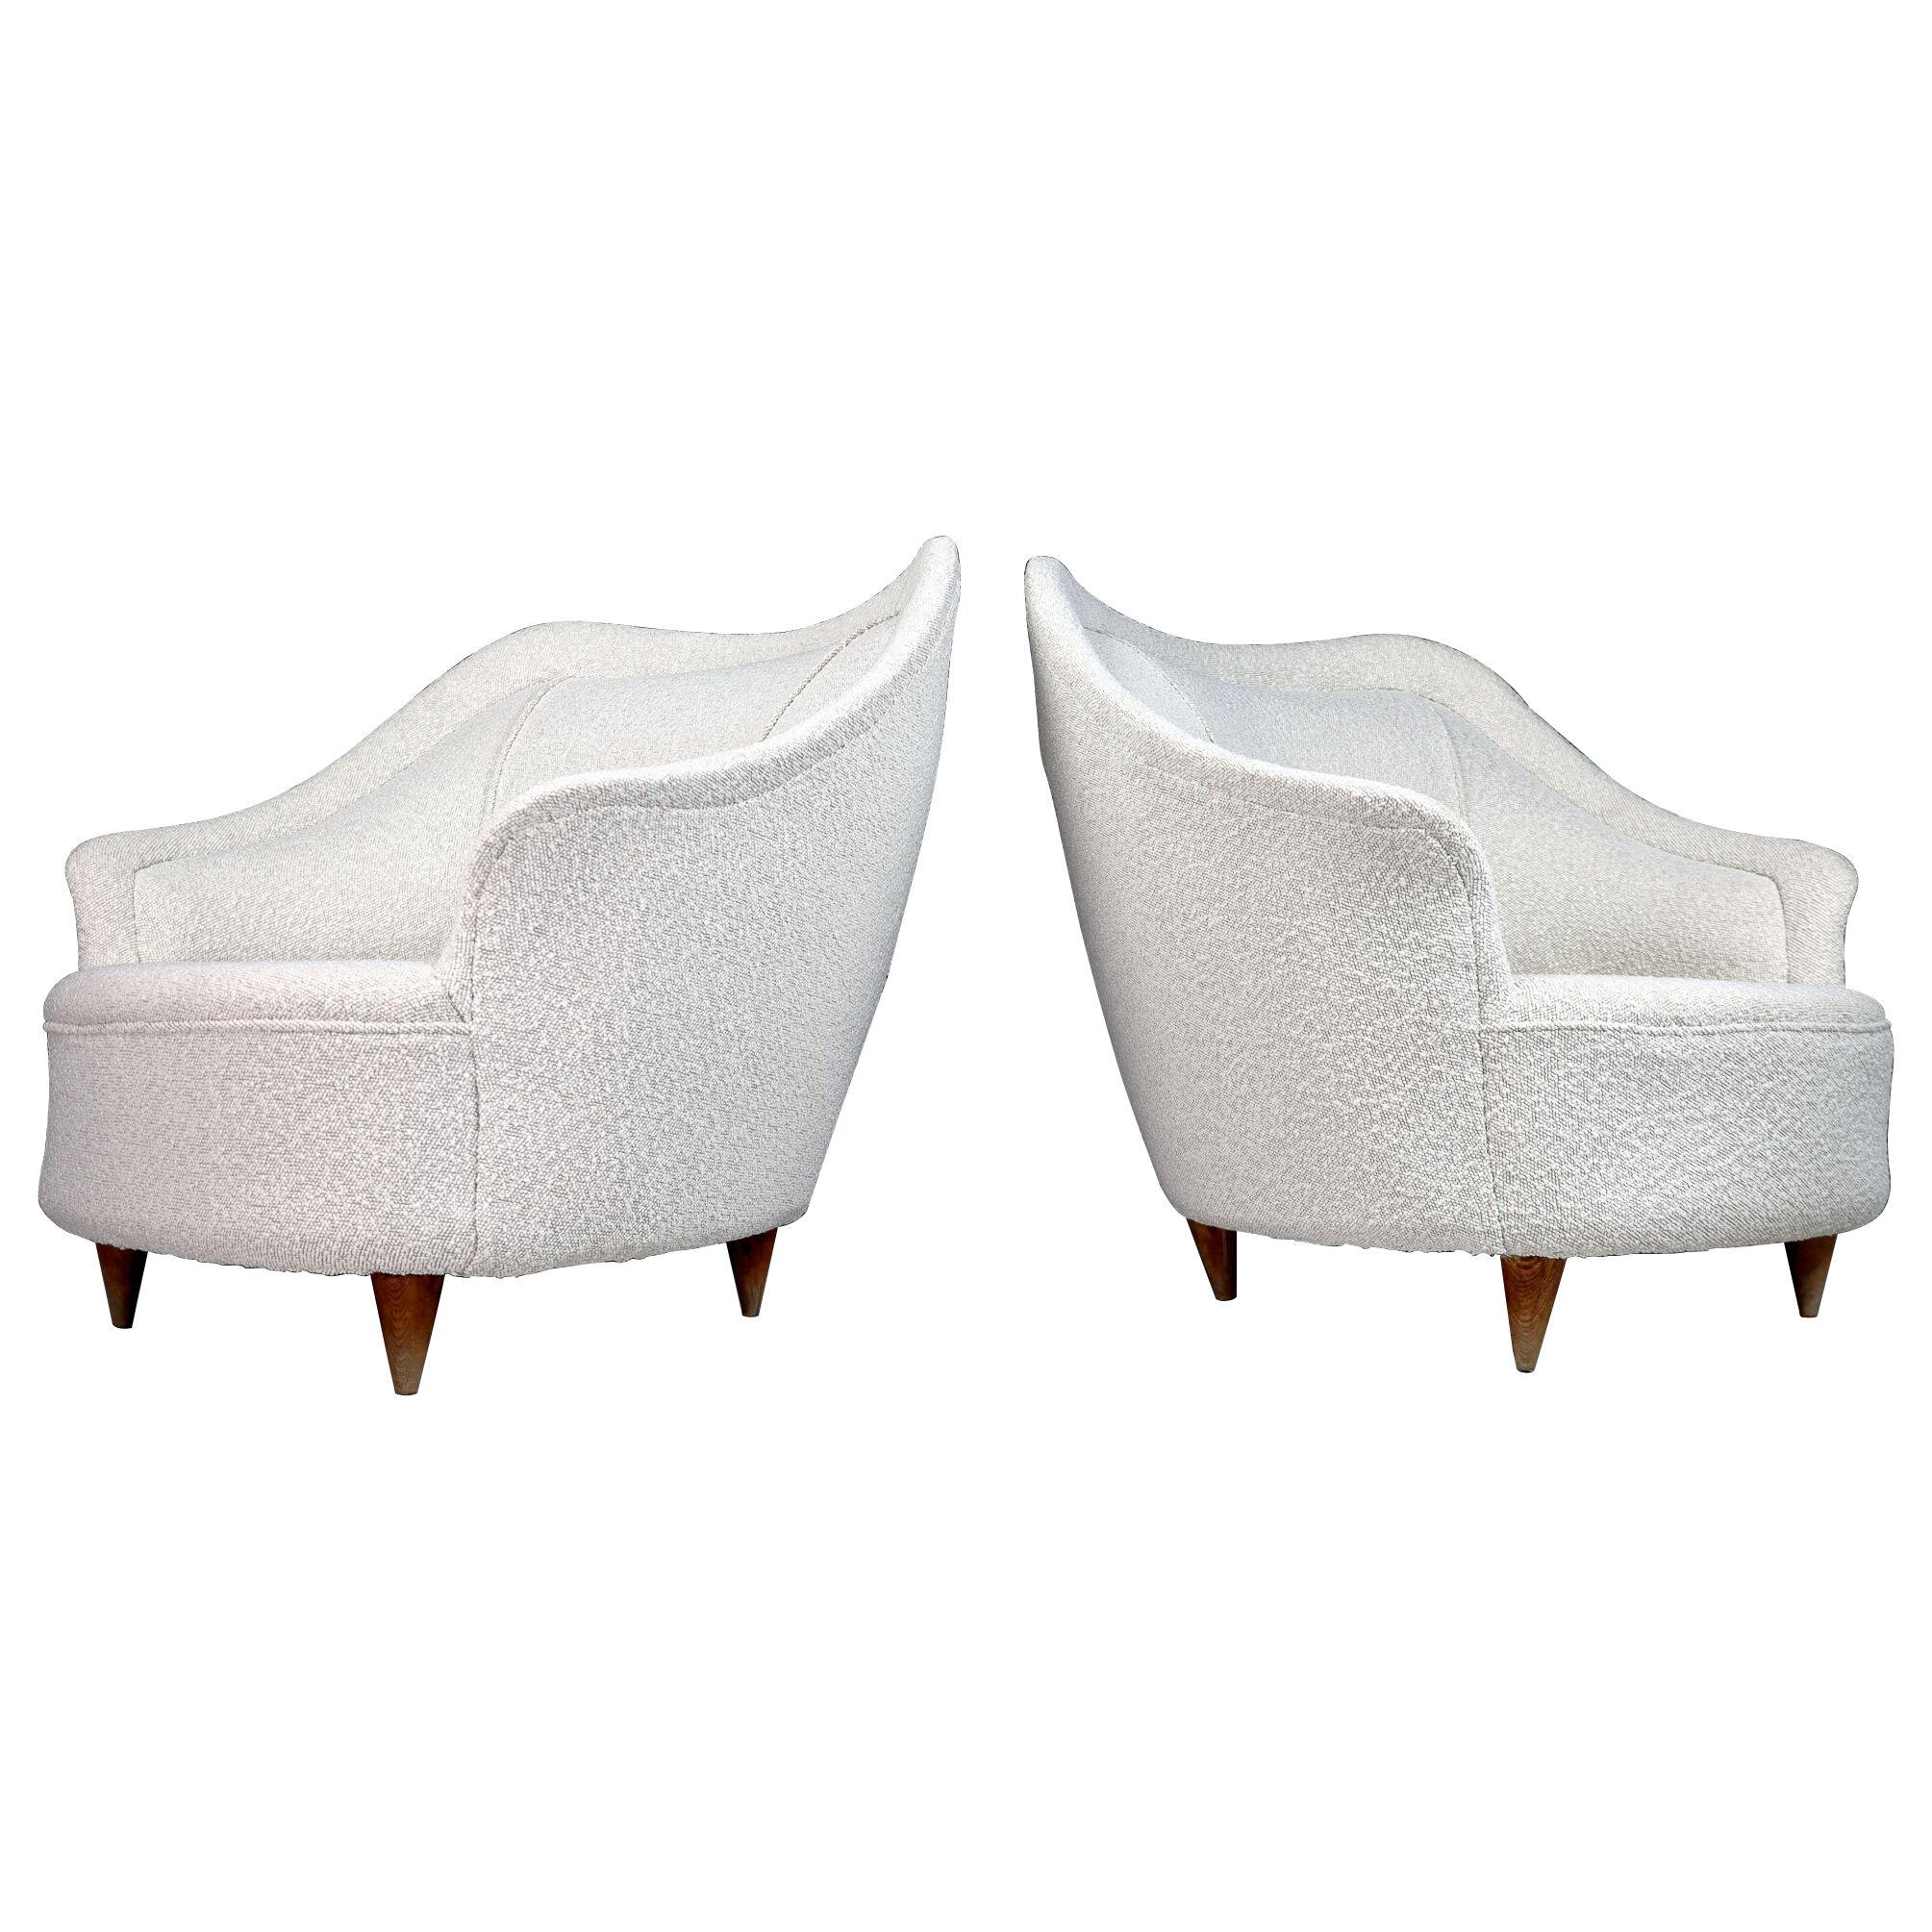 Midcentury Armchairs in New Bouclé Fabric by Gio Ponti for Casa E Giardino 1950s